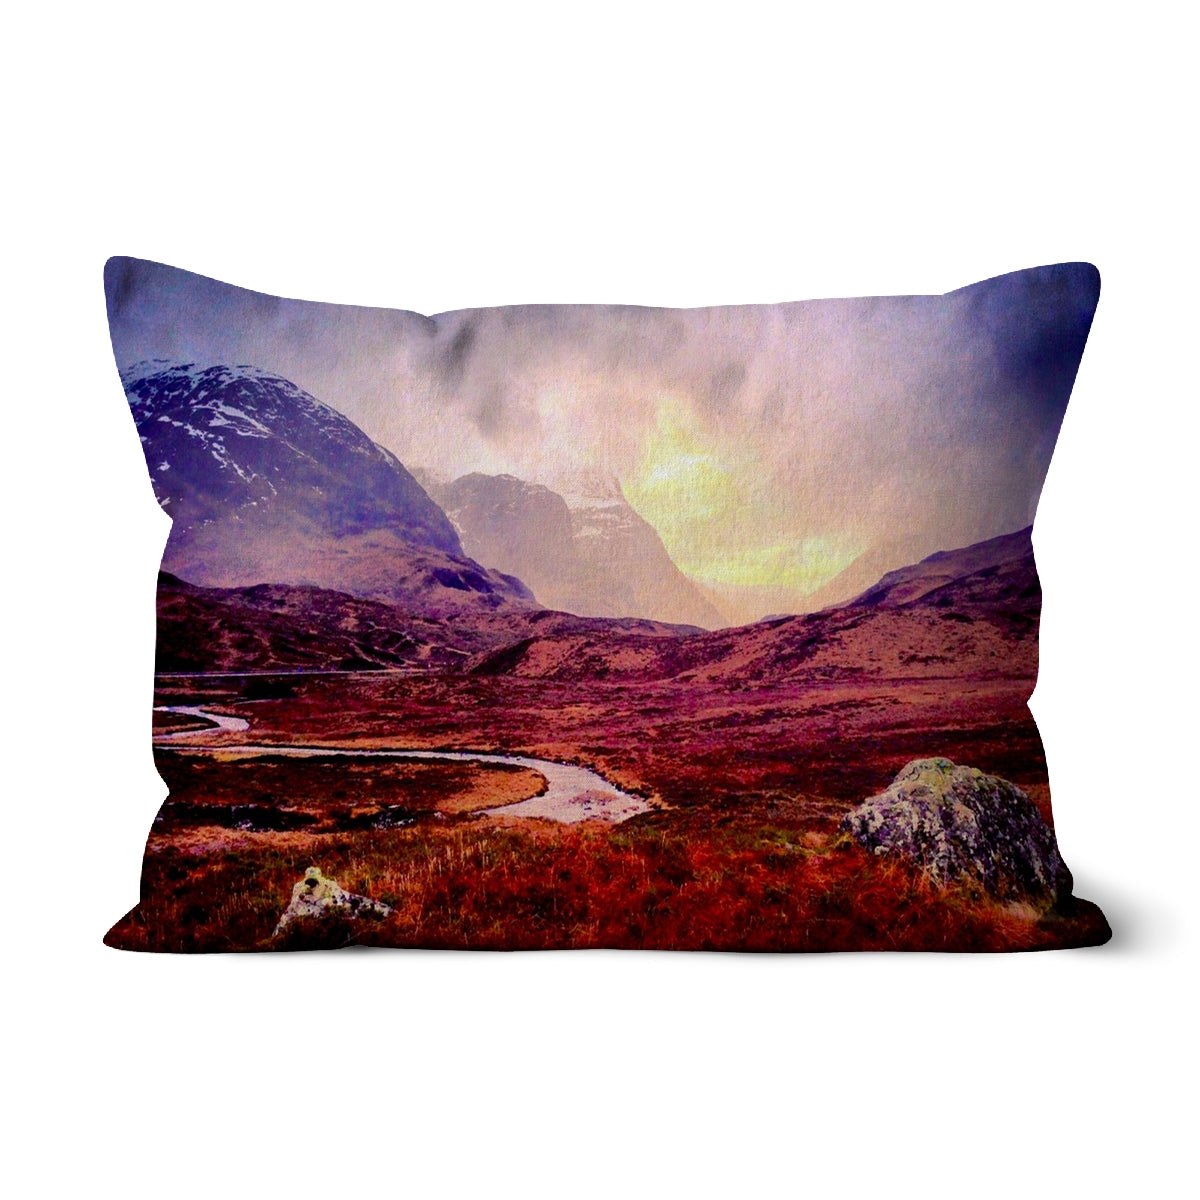 A Brooding Glencoe Art Gifts Cushion-Cushions-Glencoe Art Gallery-Linen-19"x13"-Paintings, Prints, Homeware, Art Gifts From Scotland By Scottish Artist Kevin Hunter